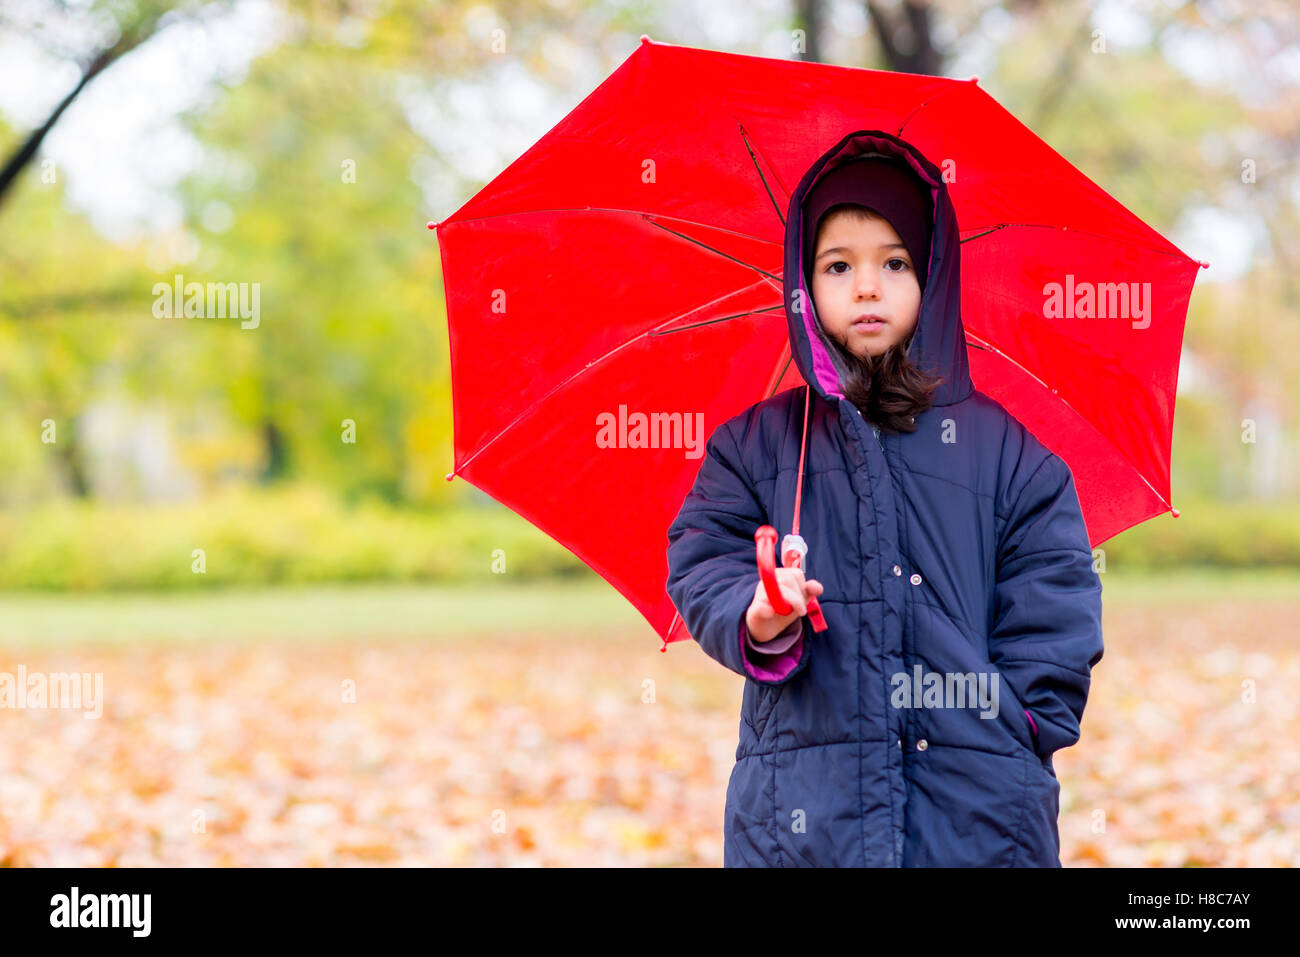 Little girl under umbrella in the autumn park Stock Photo